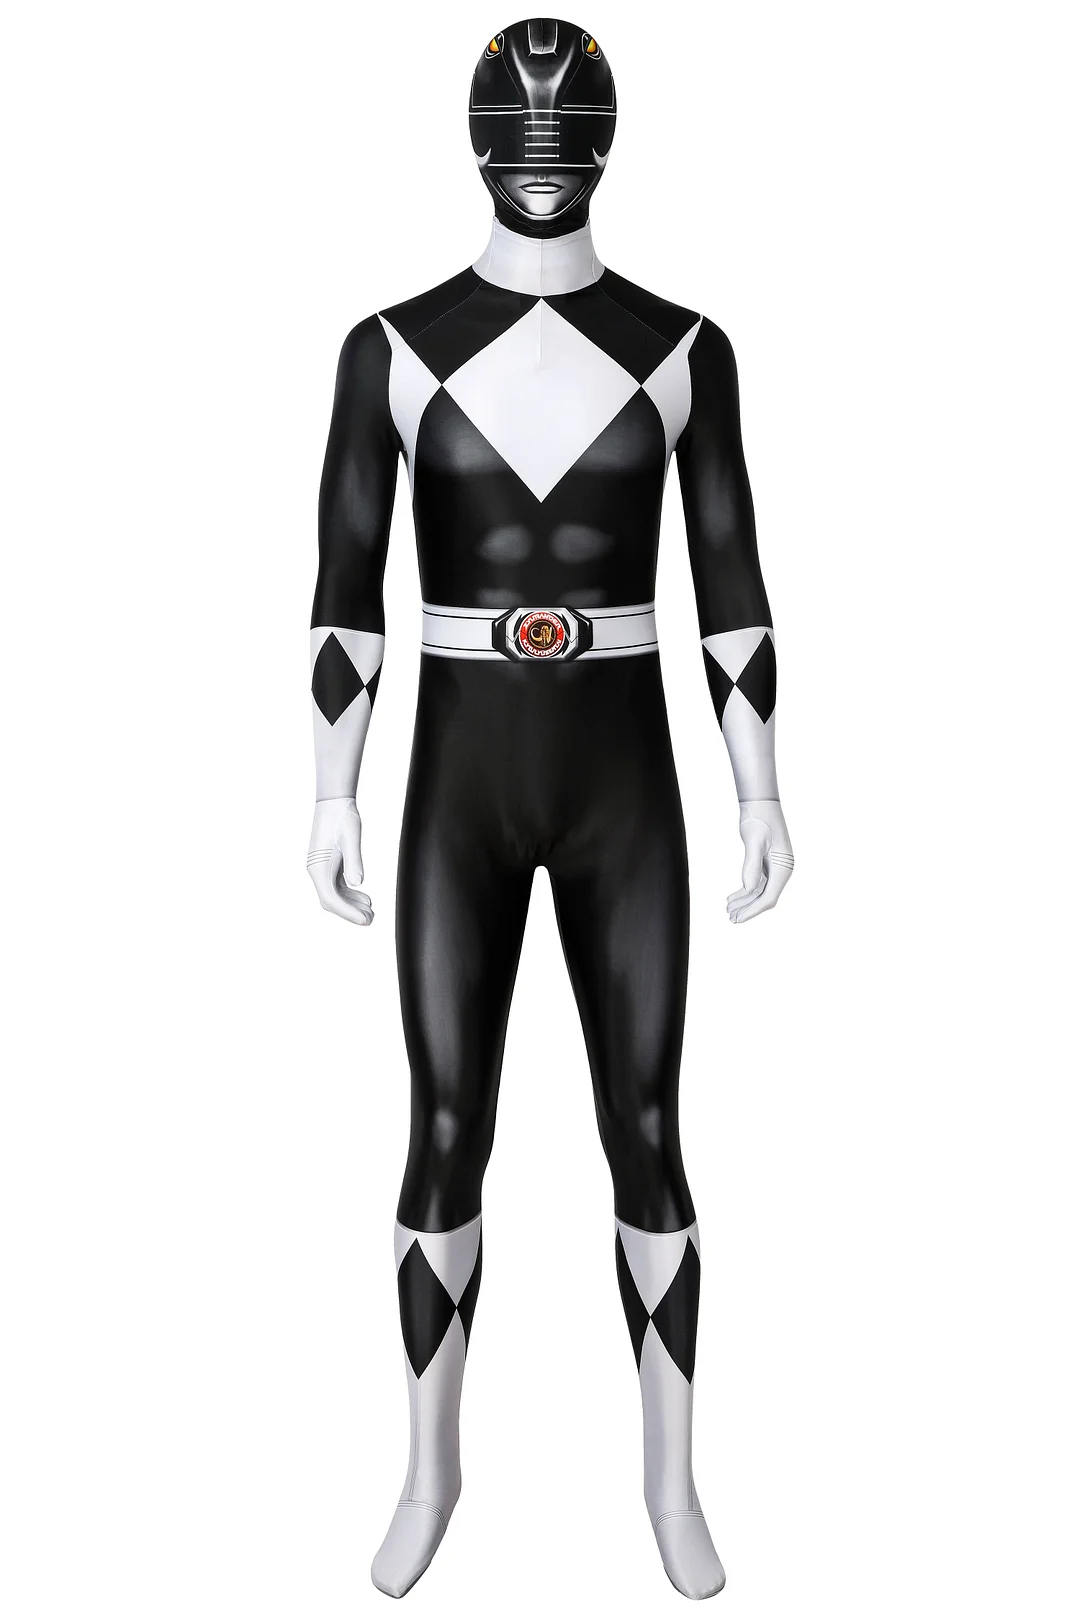 Black Power Rangers Cosplay Jumpsuit Costume HQ Printed Spandex Suit